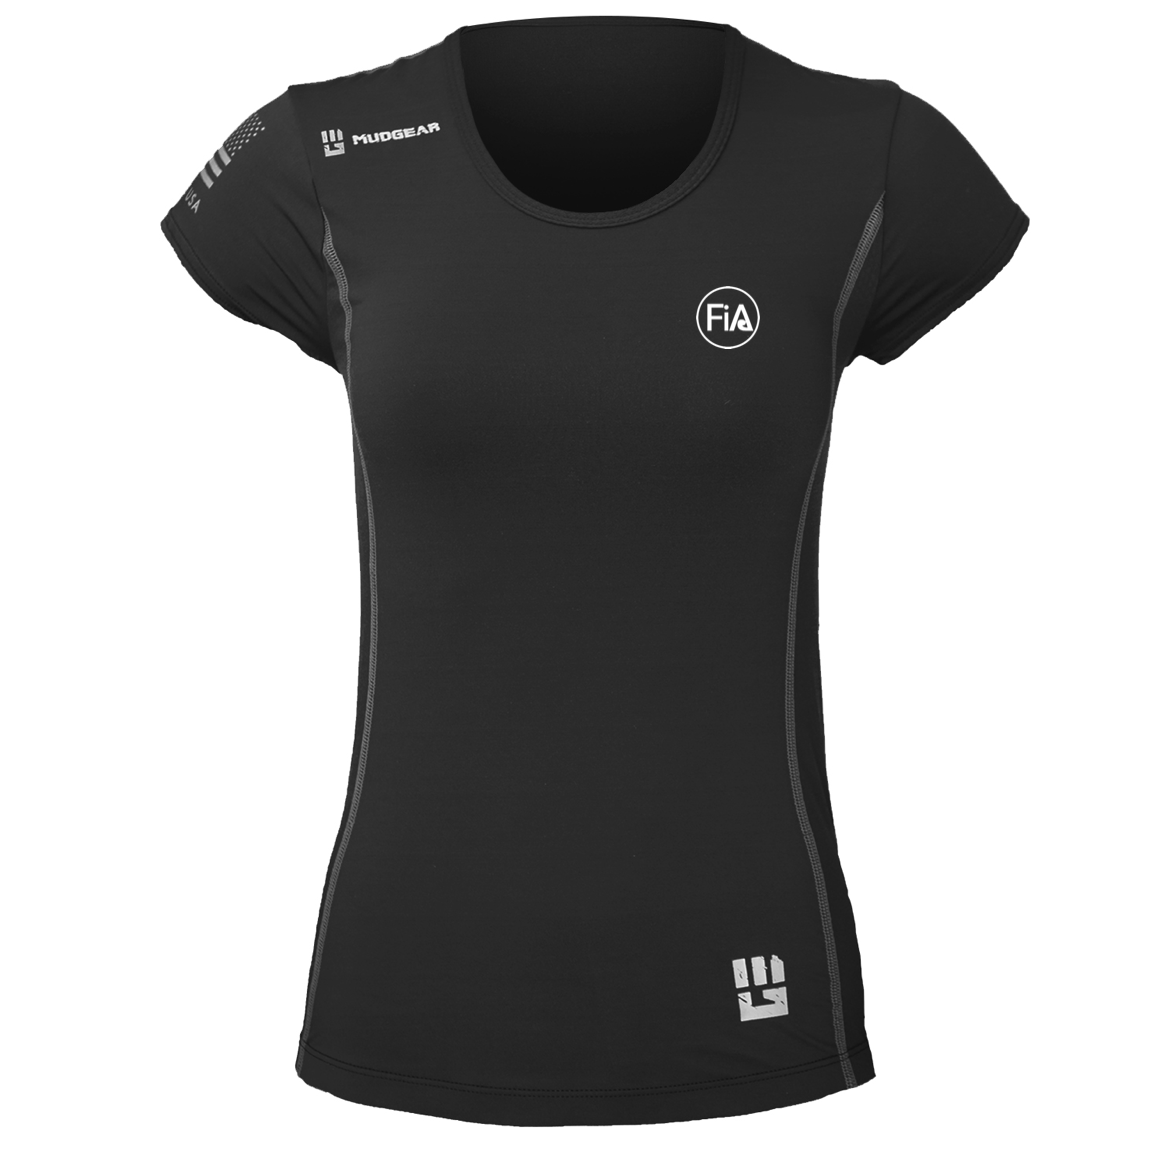 FiA MudGear Women's Performance Short Sleeve (Black) - Made to Order